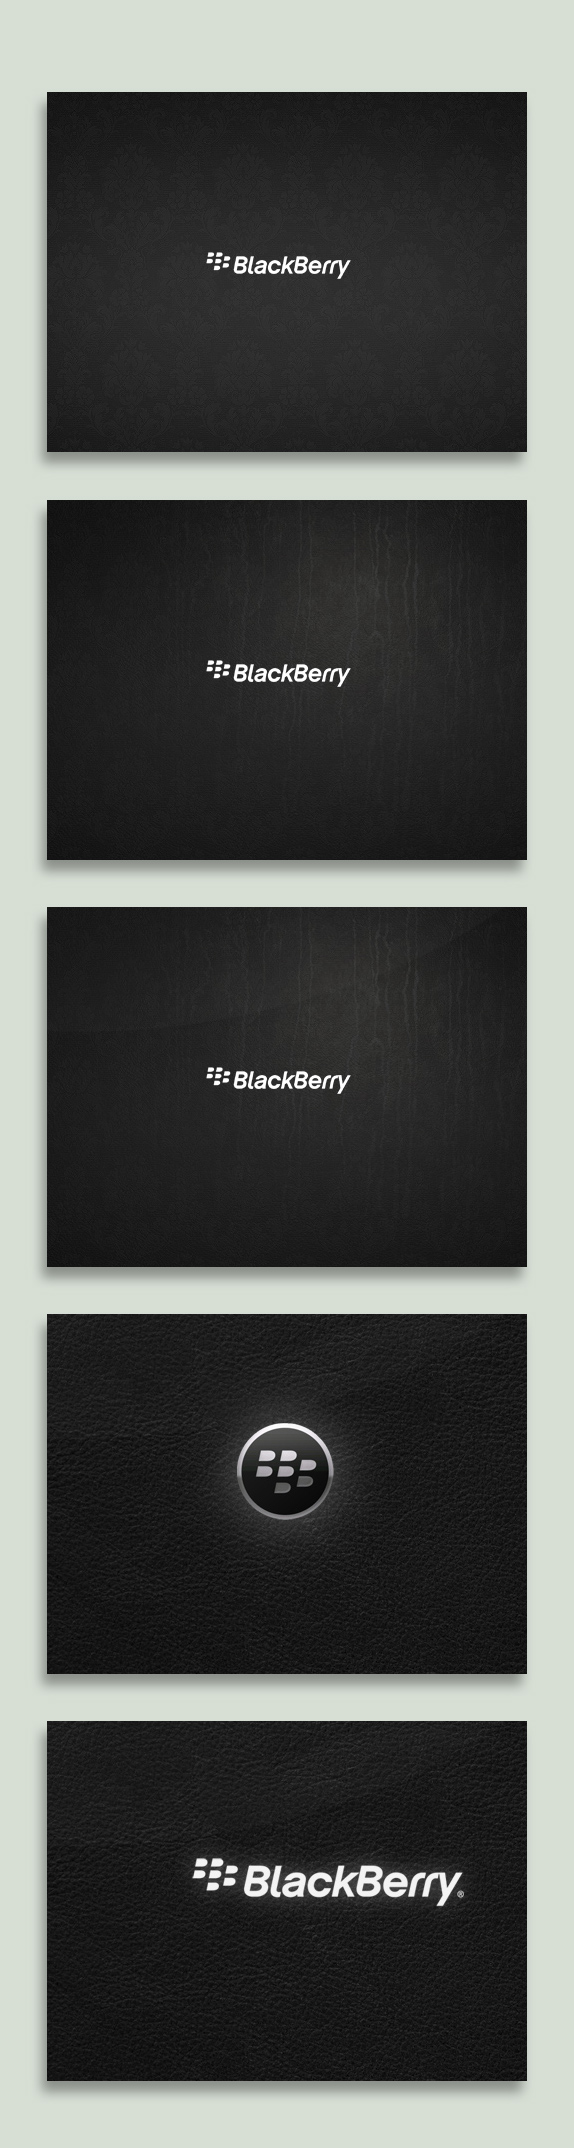 blackberry backgrounds.